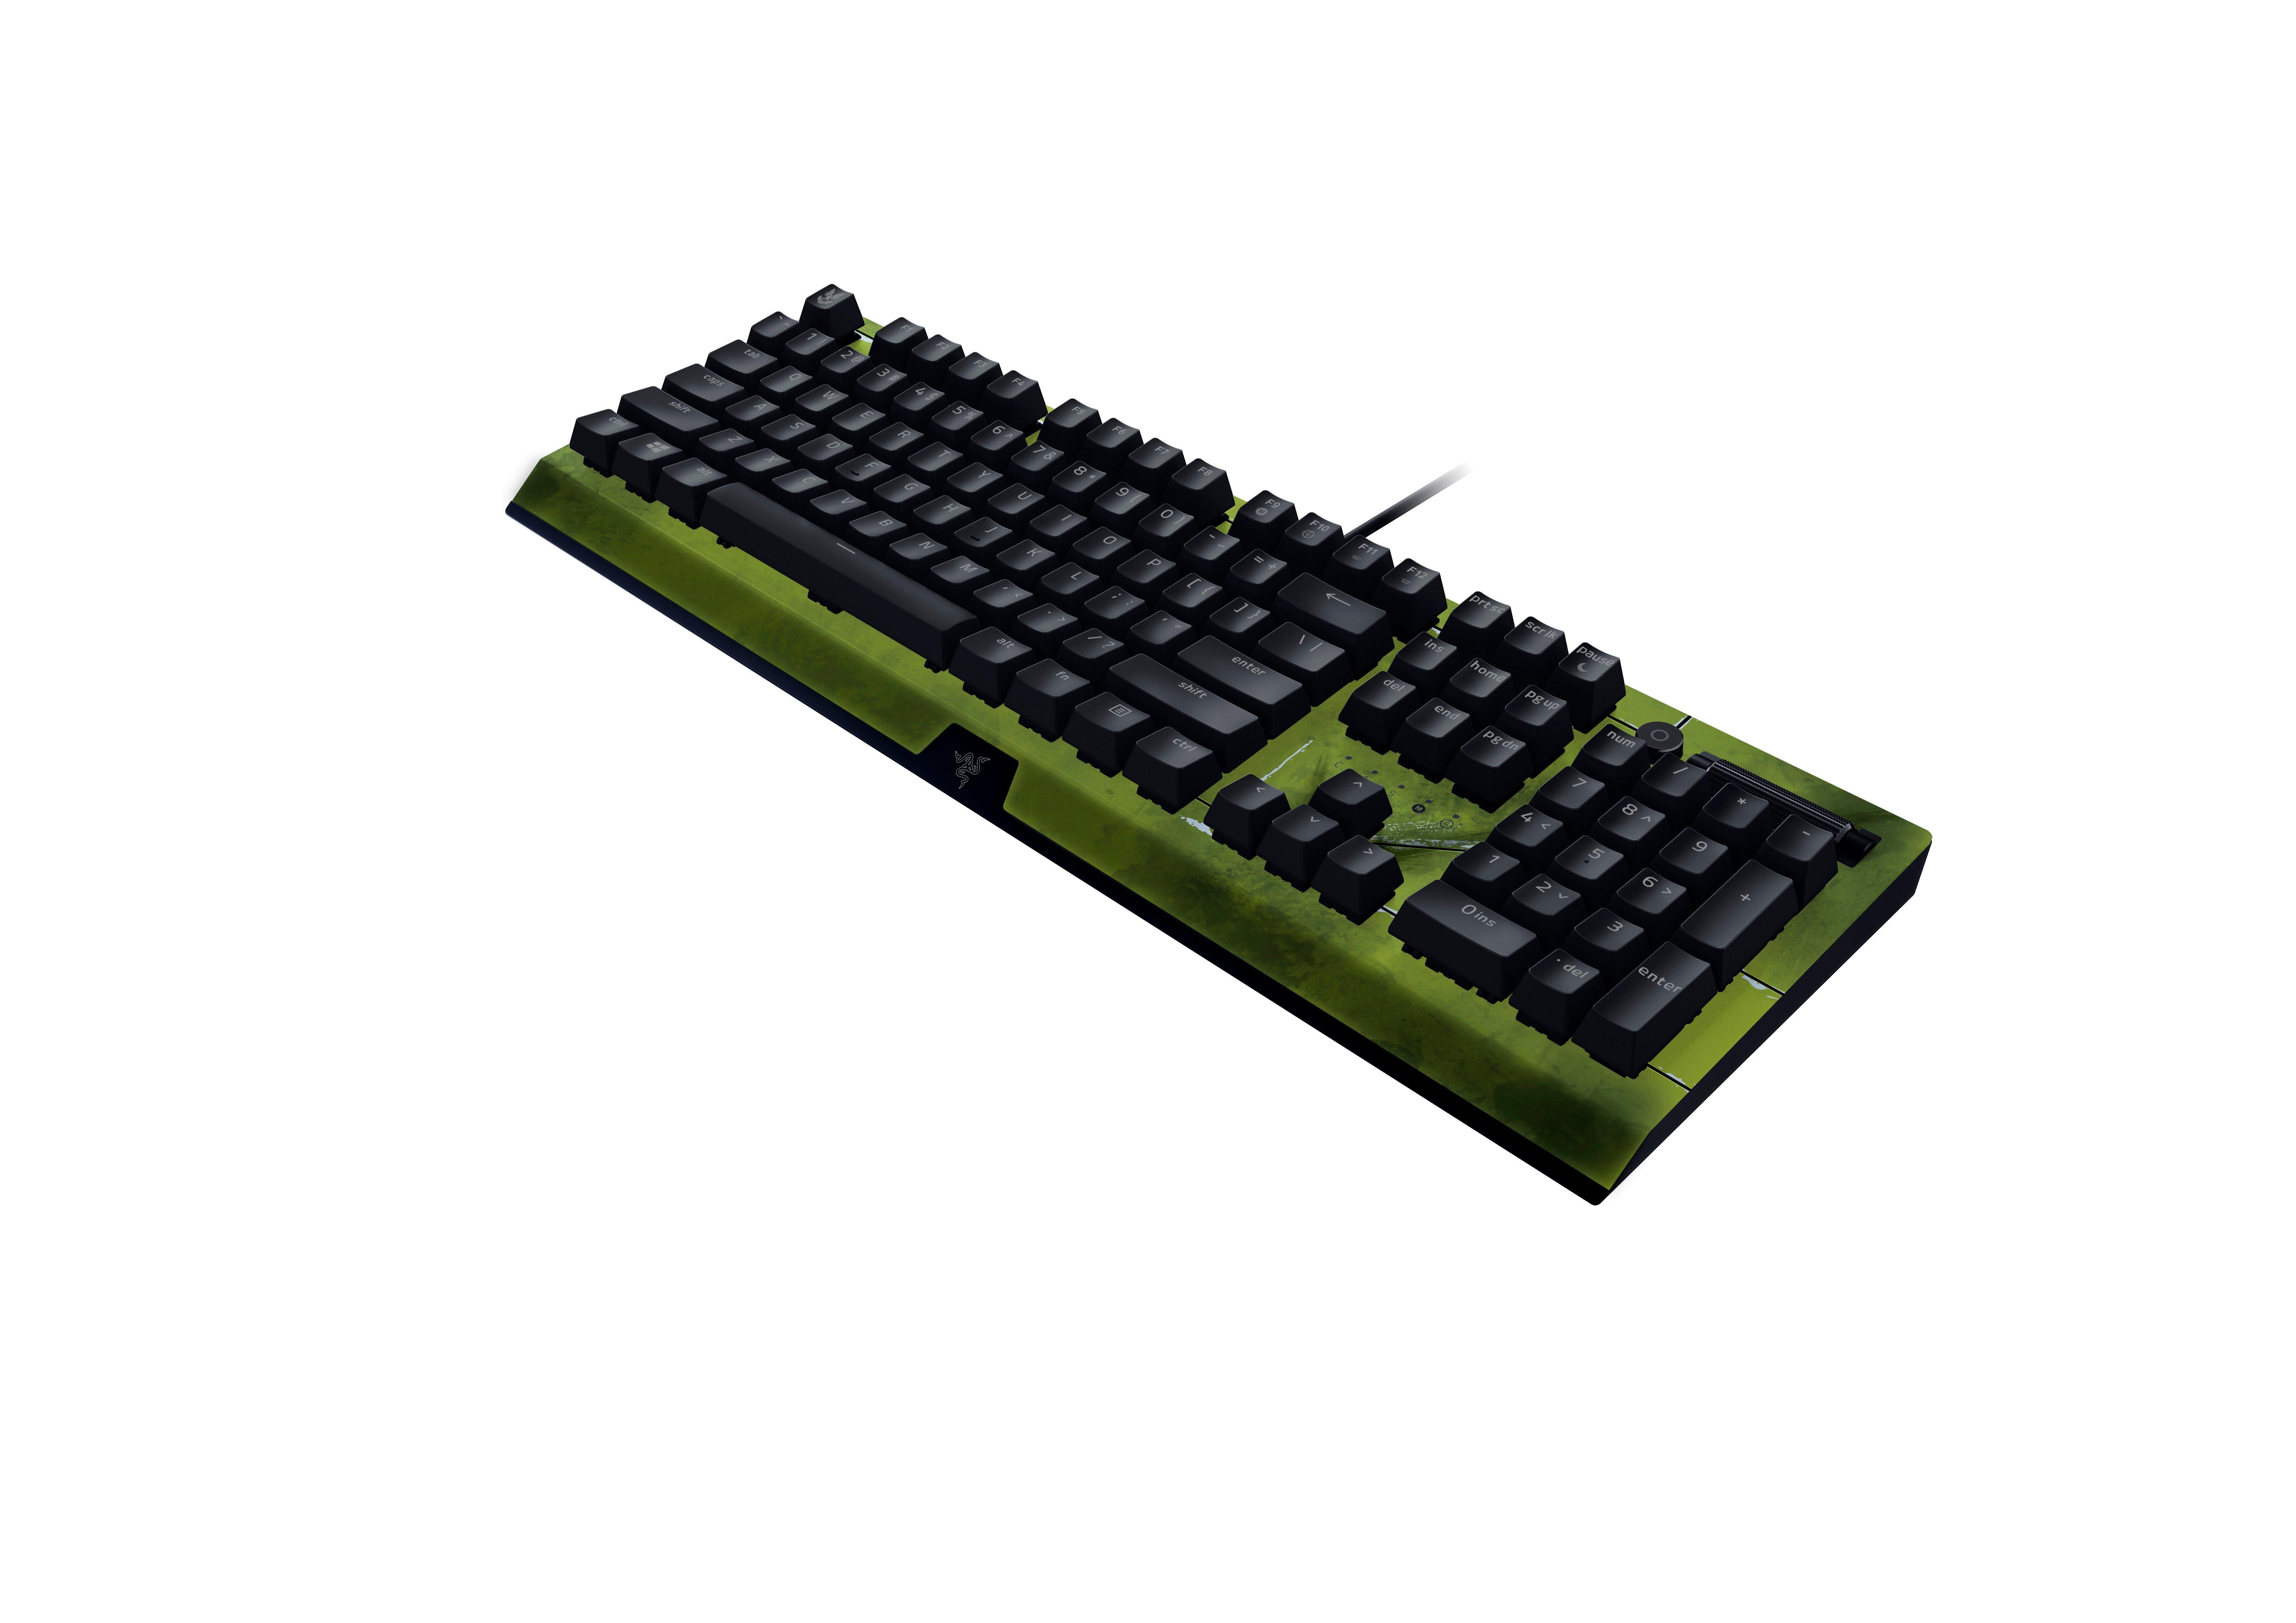 list item 3 of 8 Razer BlackWidow V3 Green Switch Mechanical Gaming Keyboard - Halo Infinite Edition